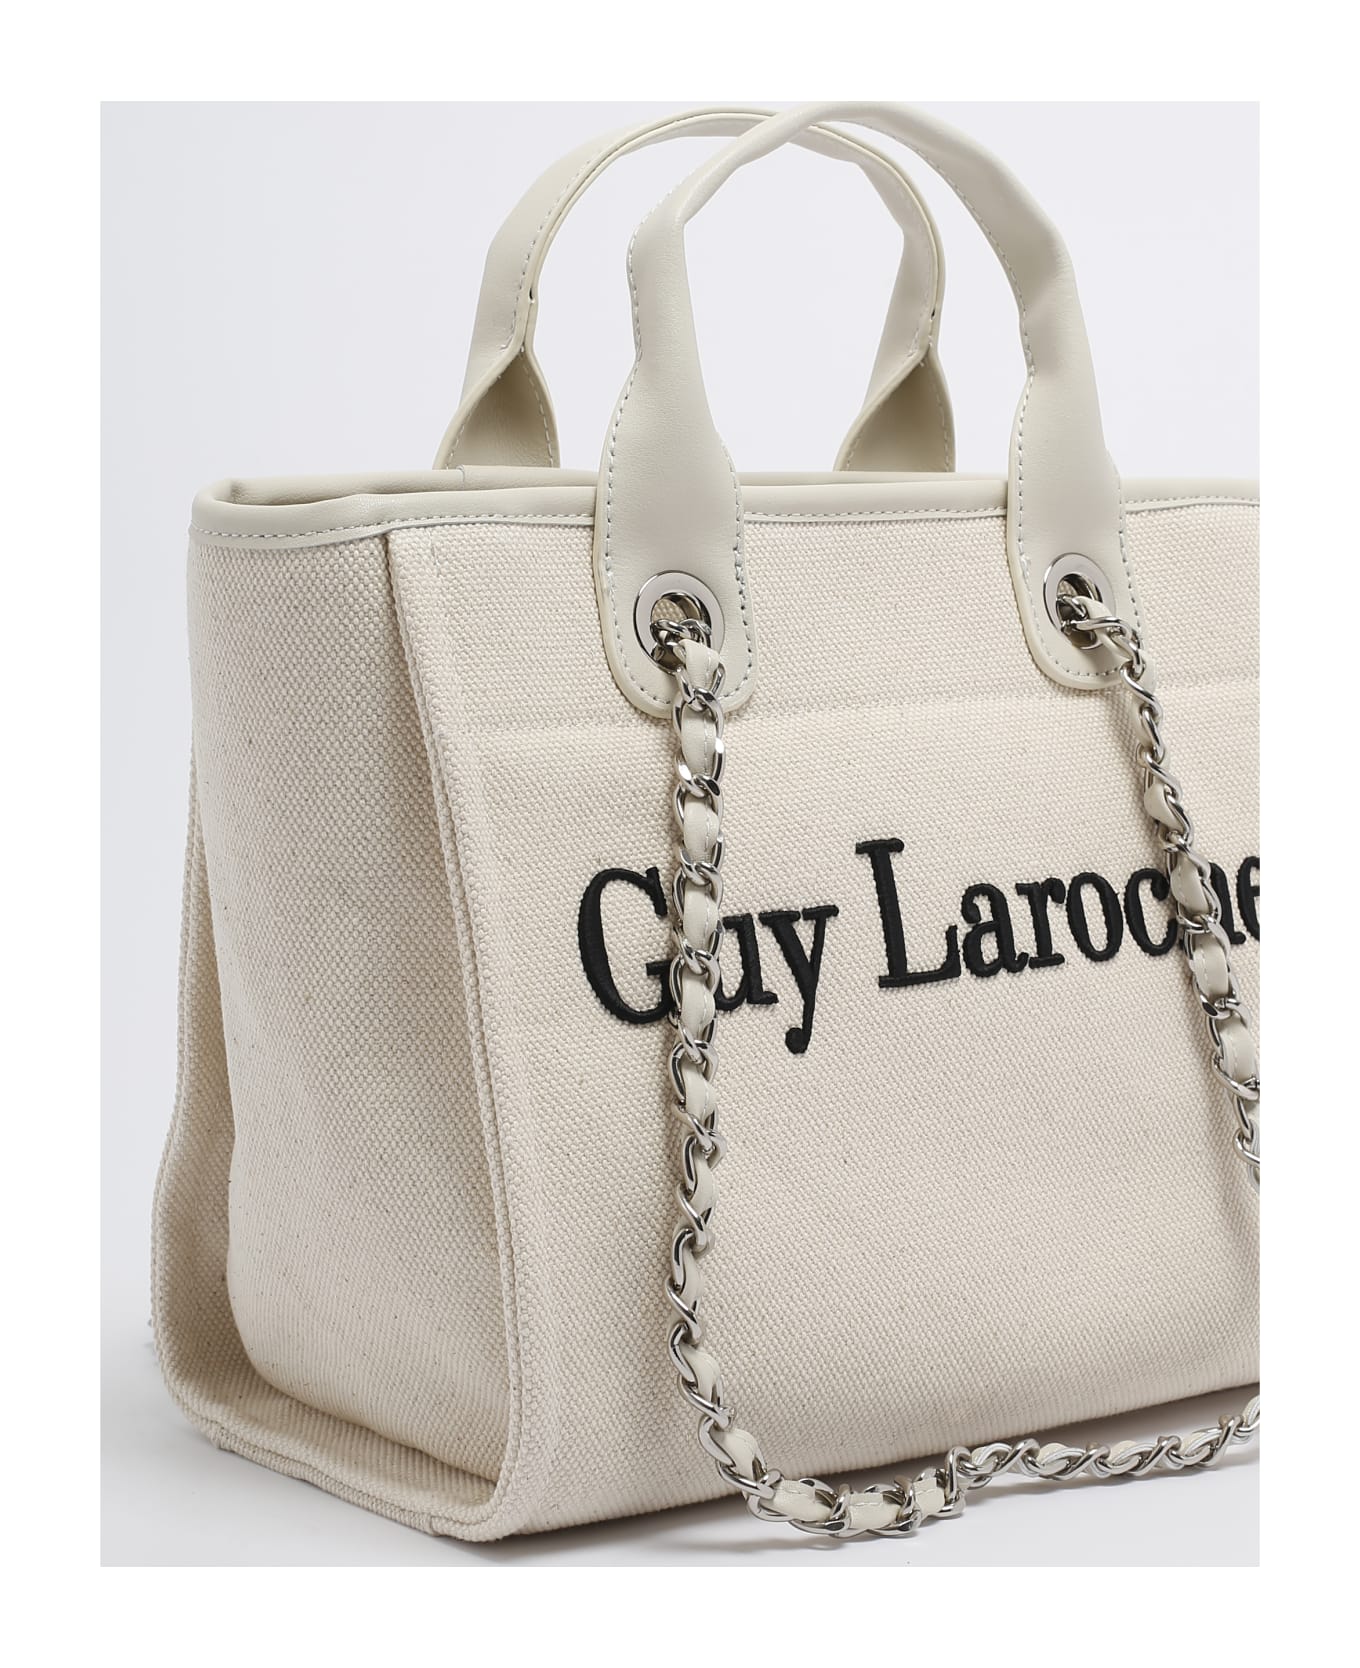 Guy Laroche Corinne Small Shopping Bag - NATURALE トートバッグ